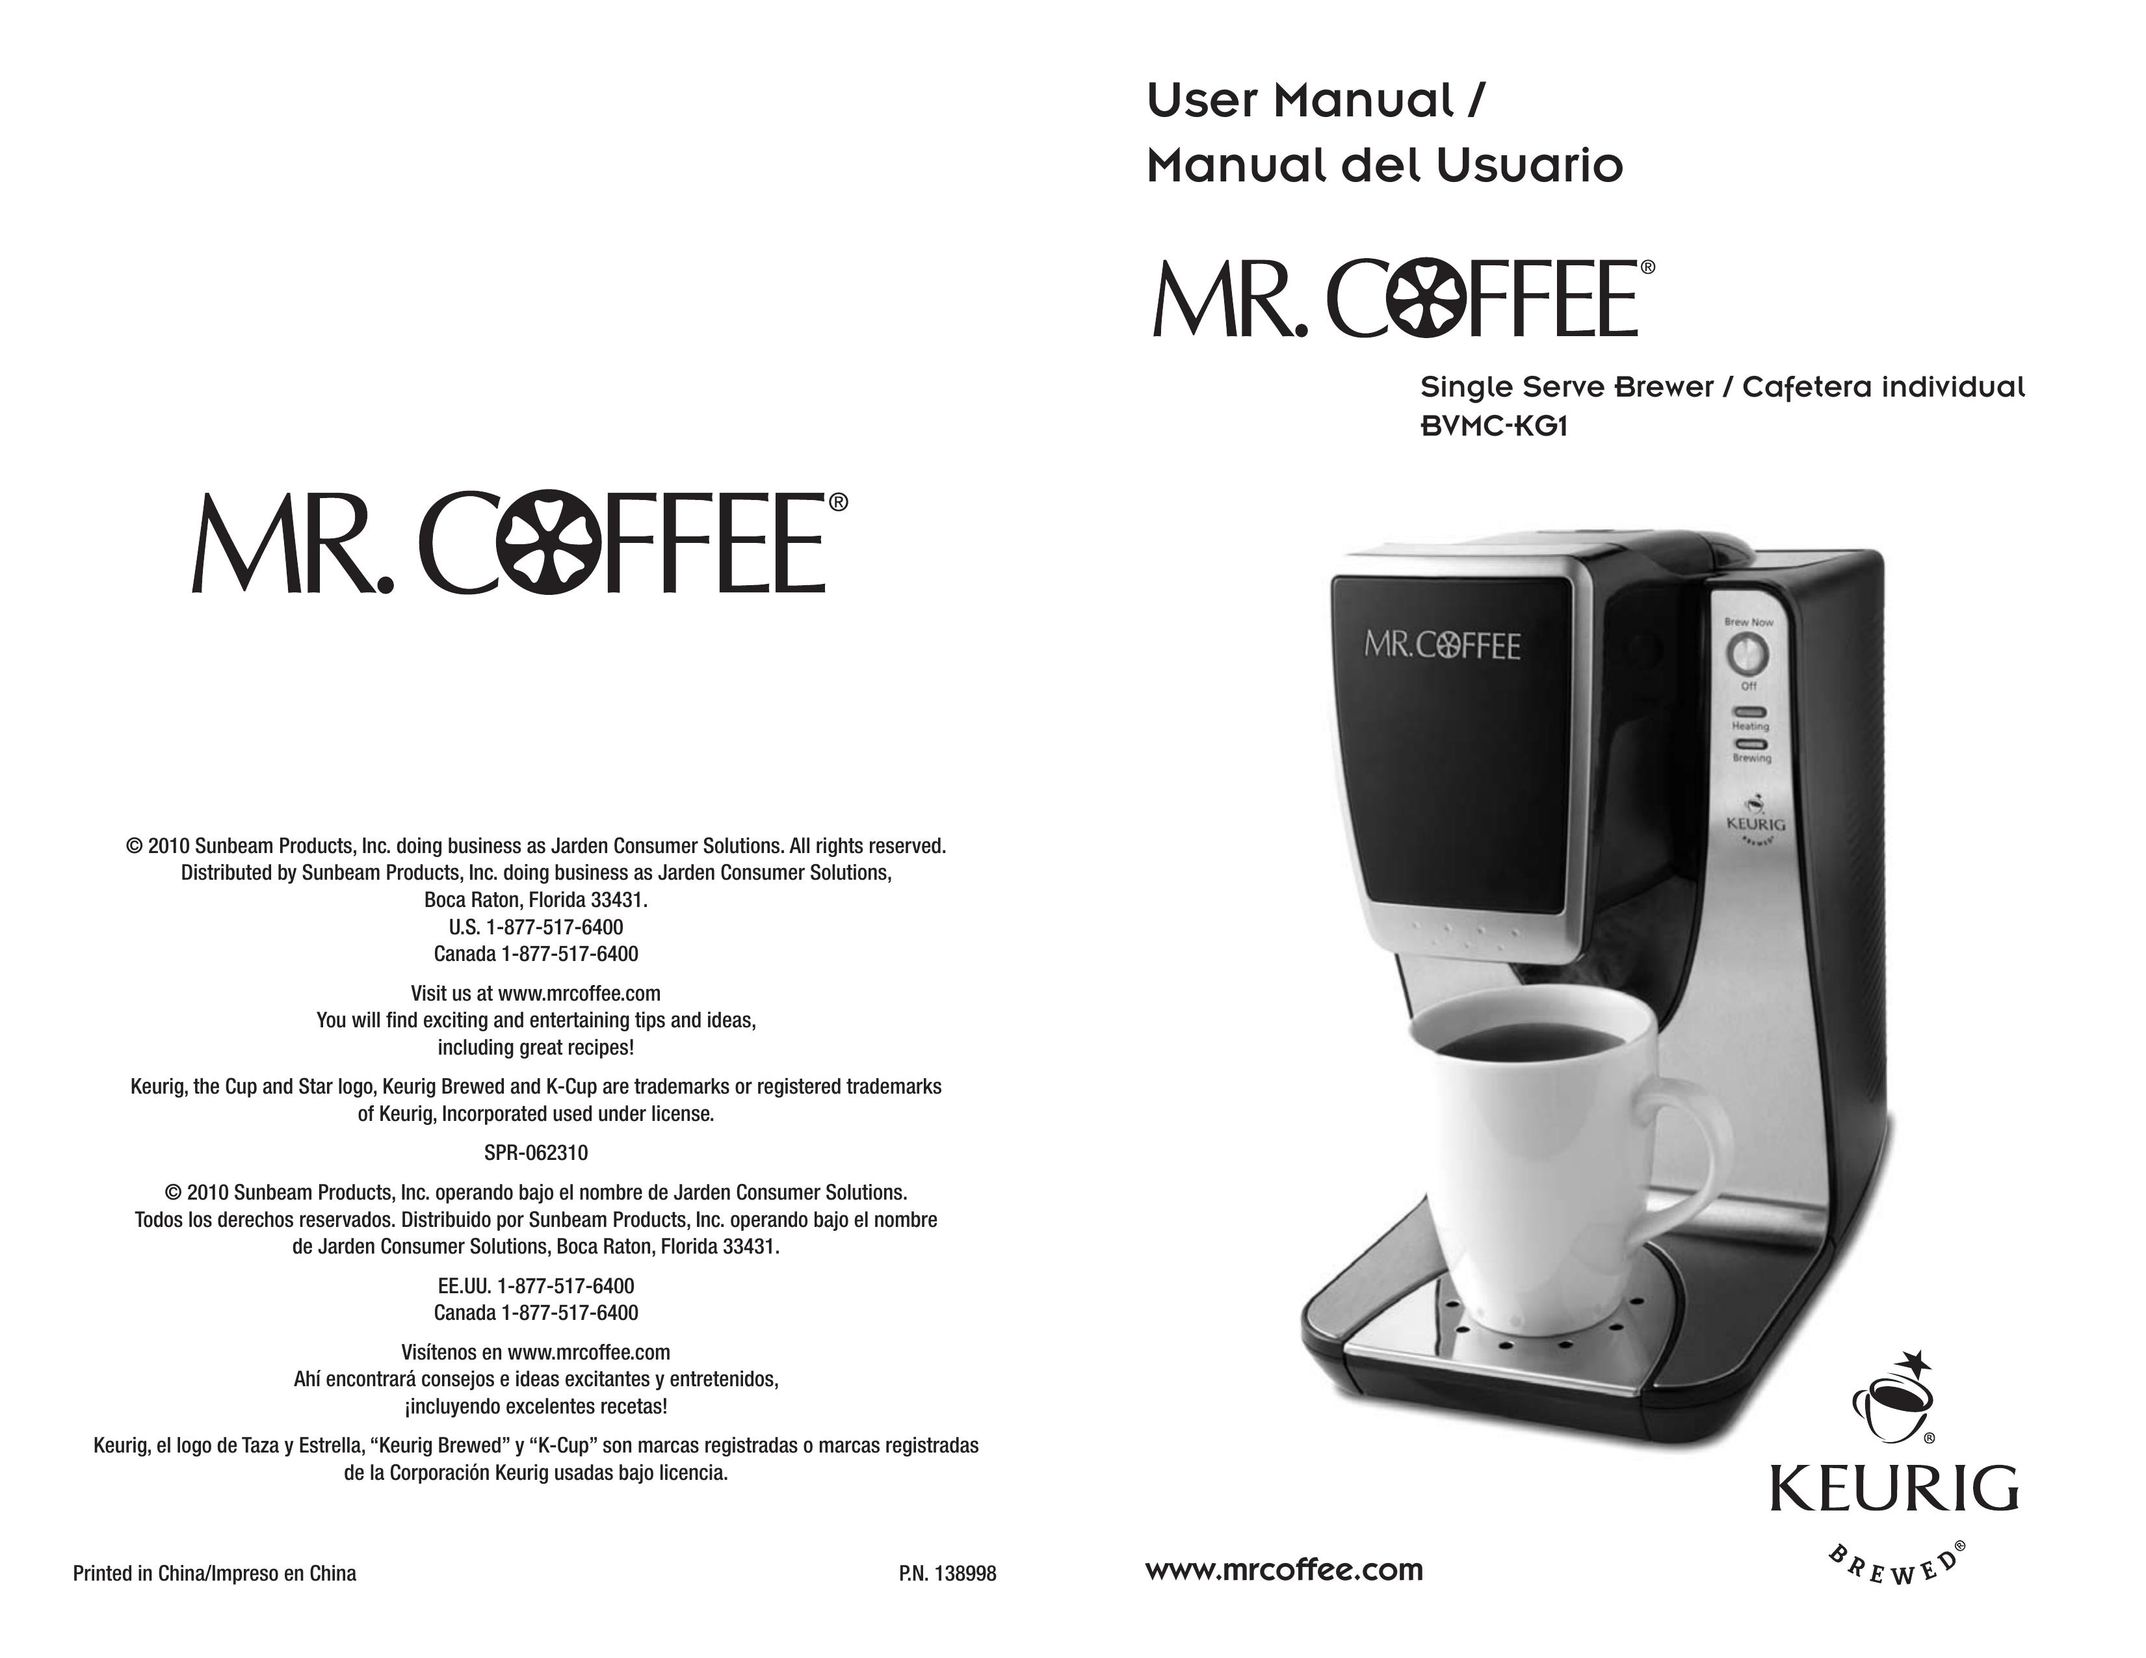 Mr. Coffee 138998 Coffeemaker User Manual